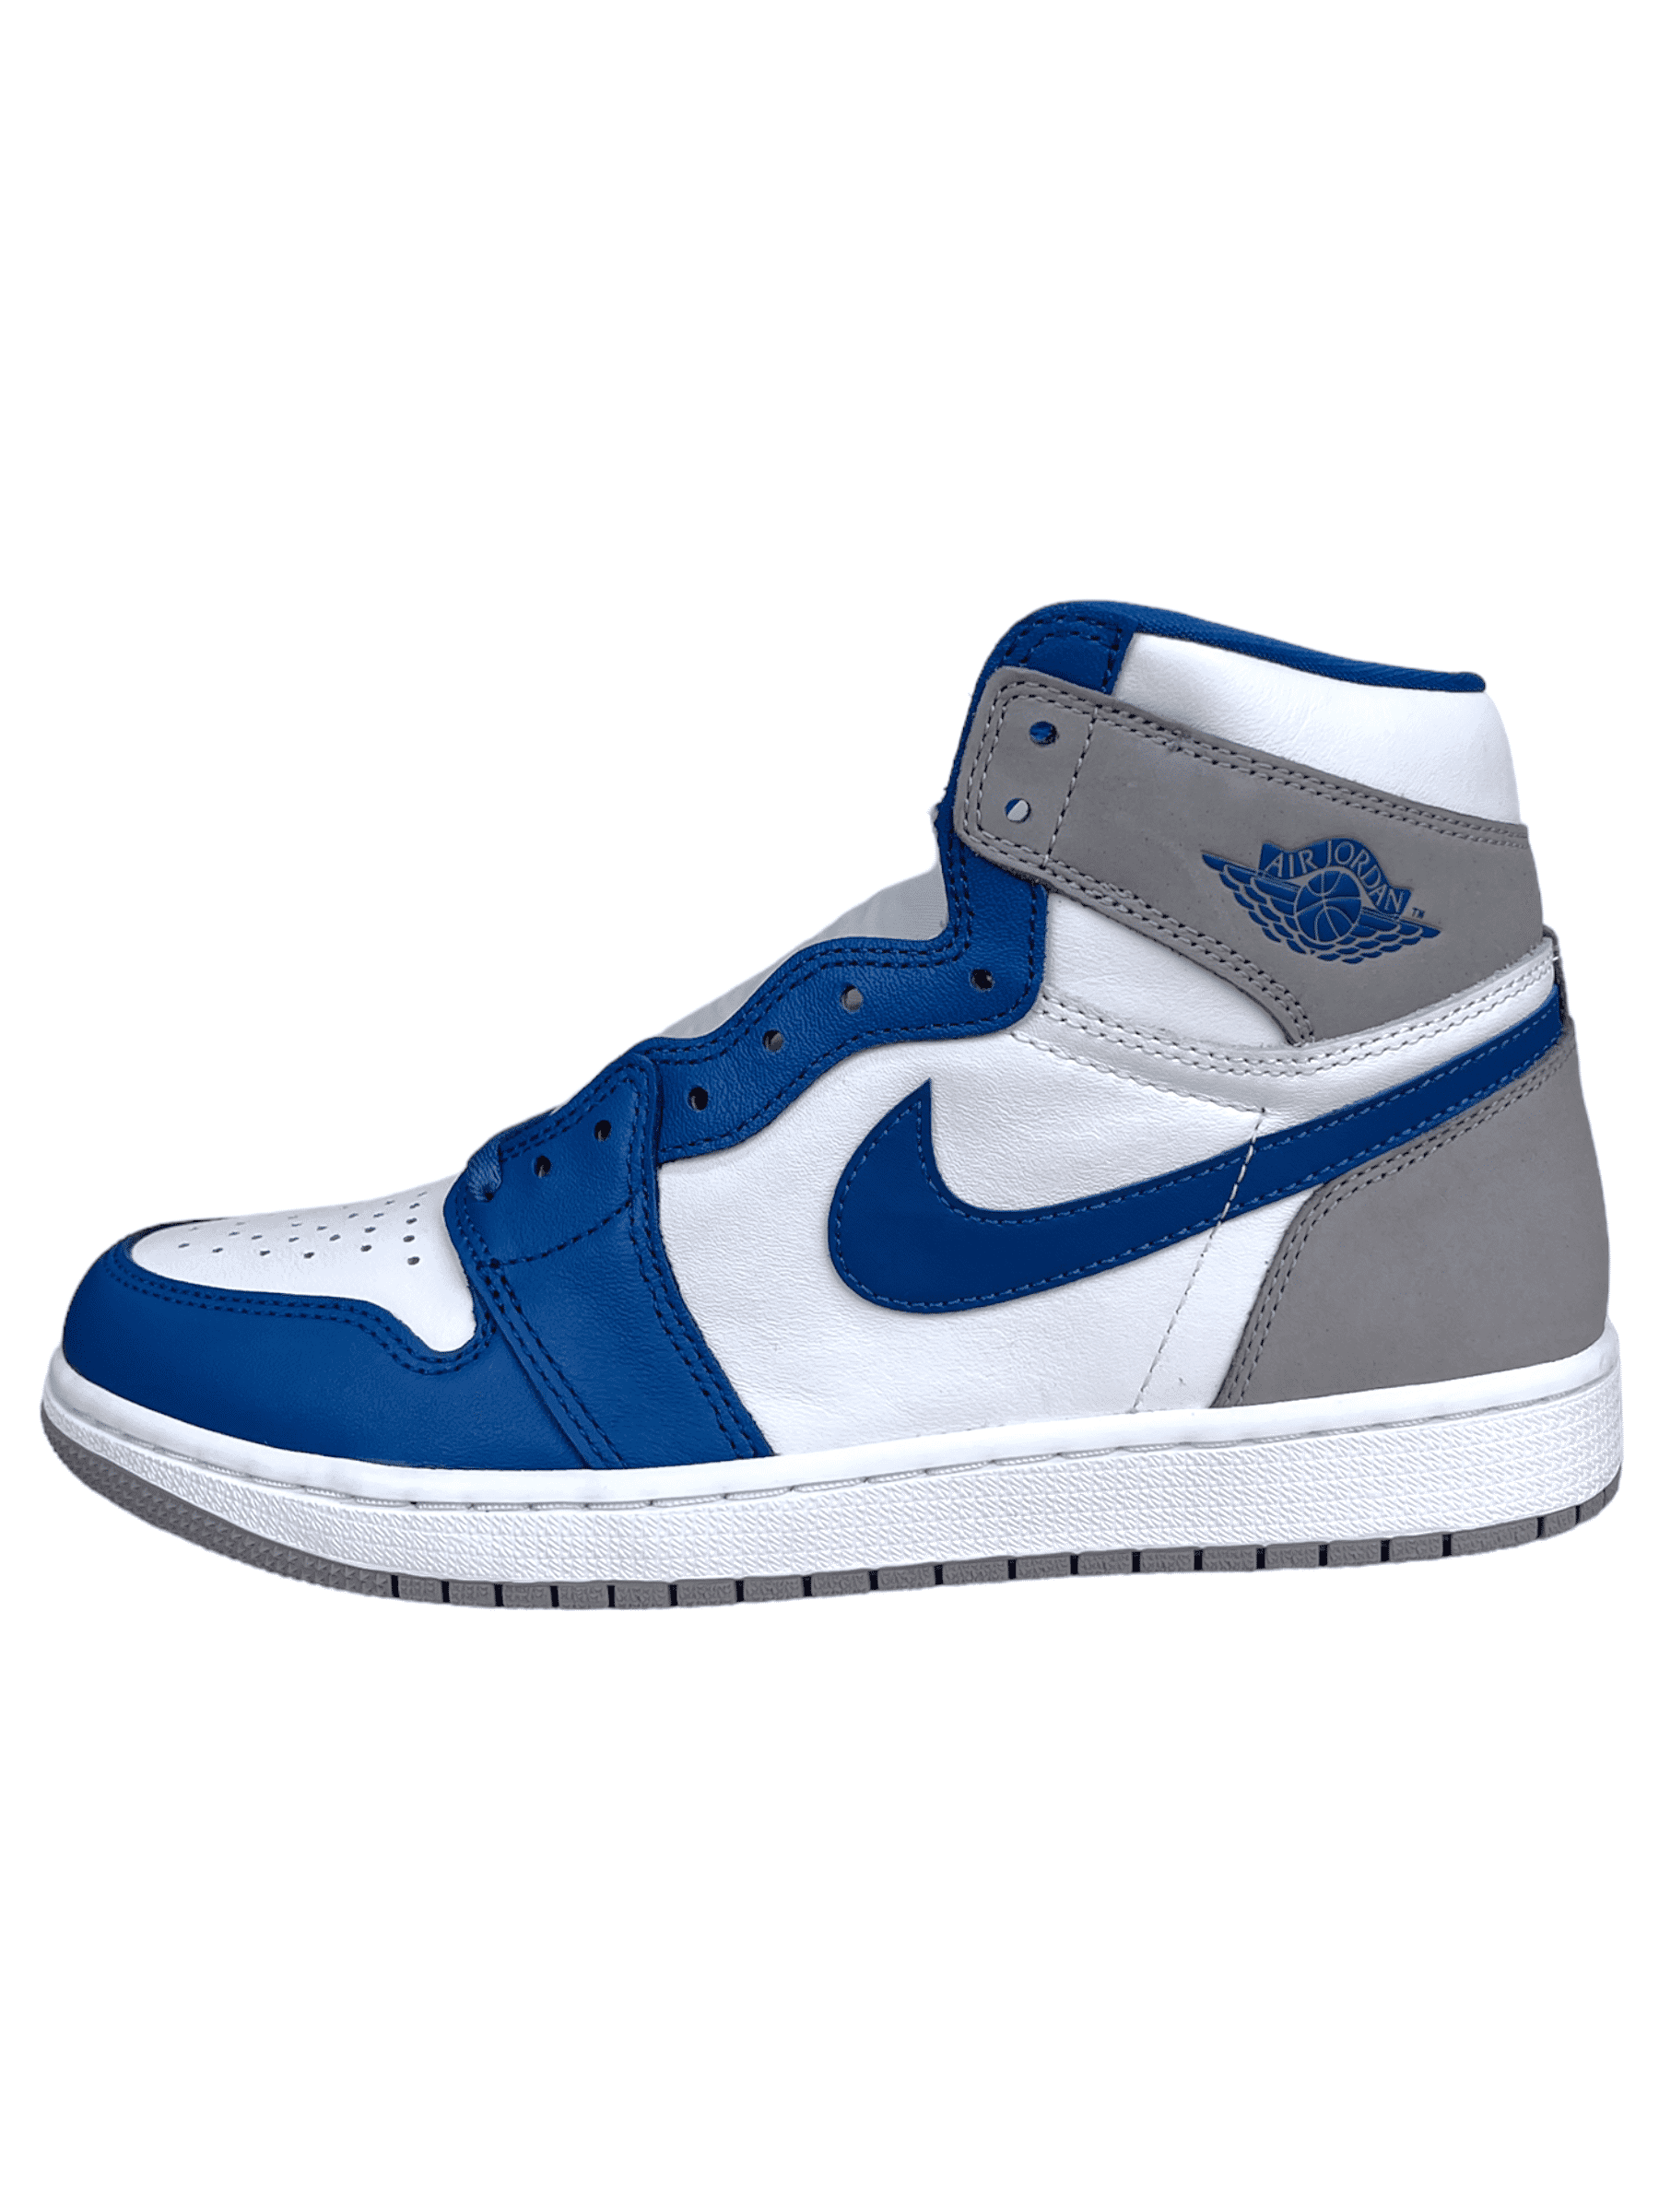 Nike Air Jordan 1 Retro High OG True Blue Sneakers – Genuine